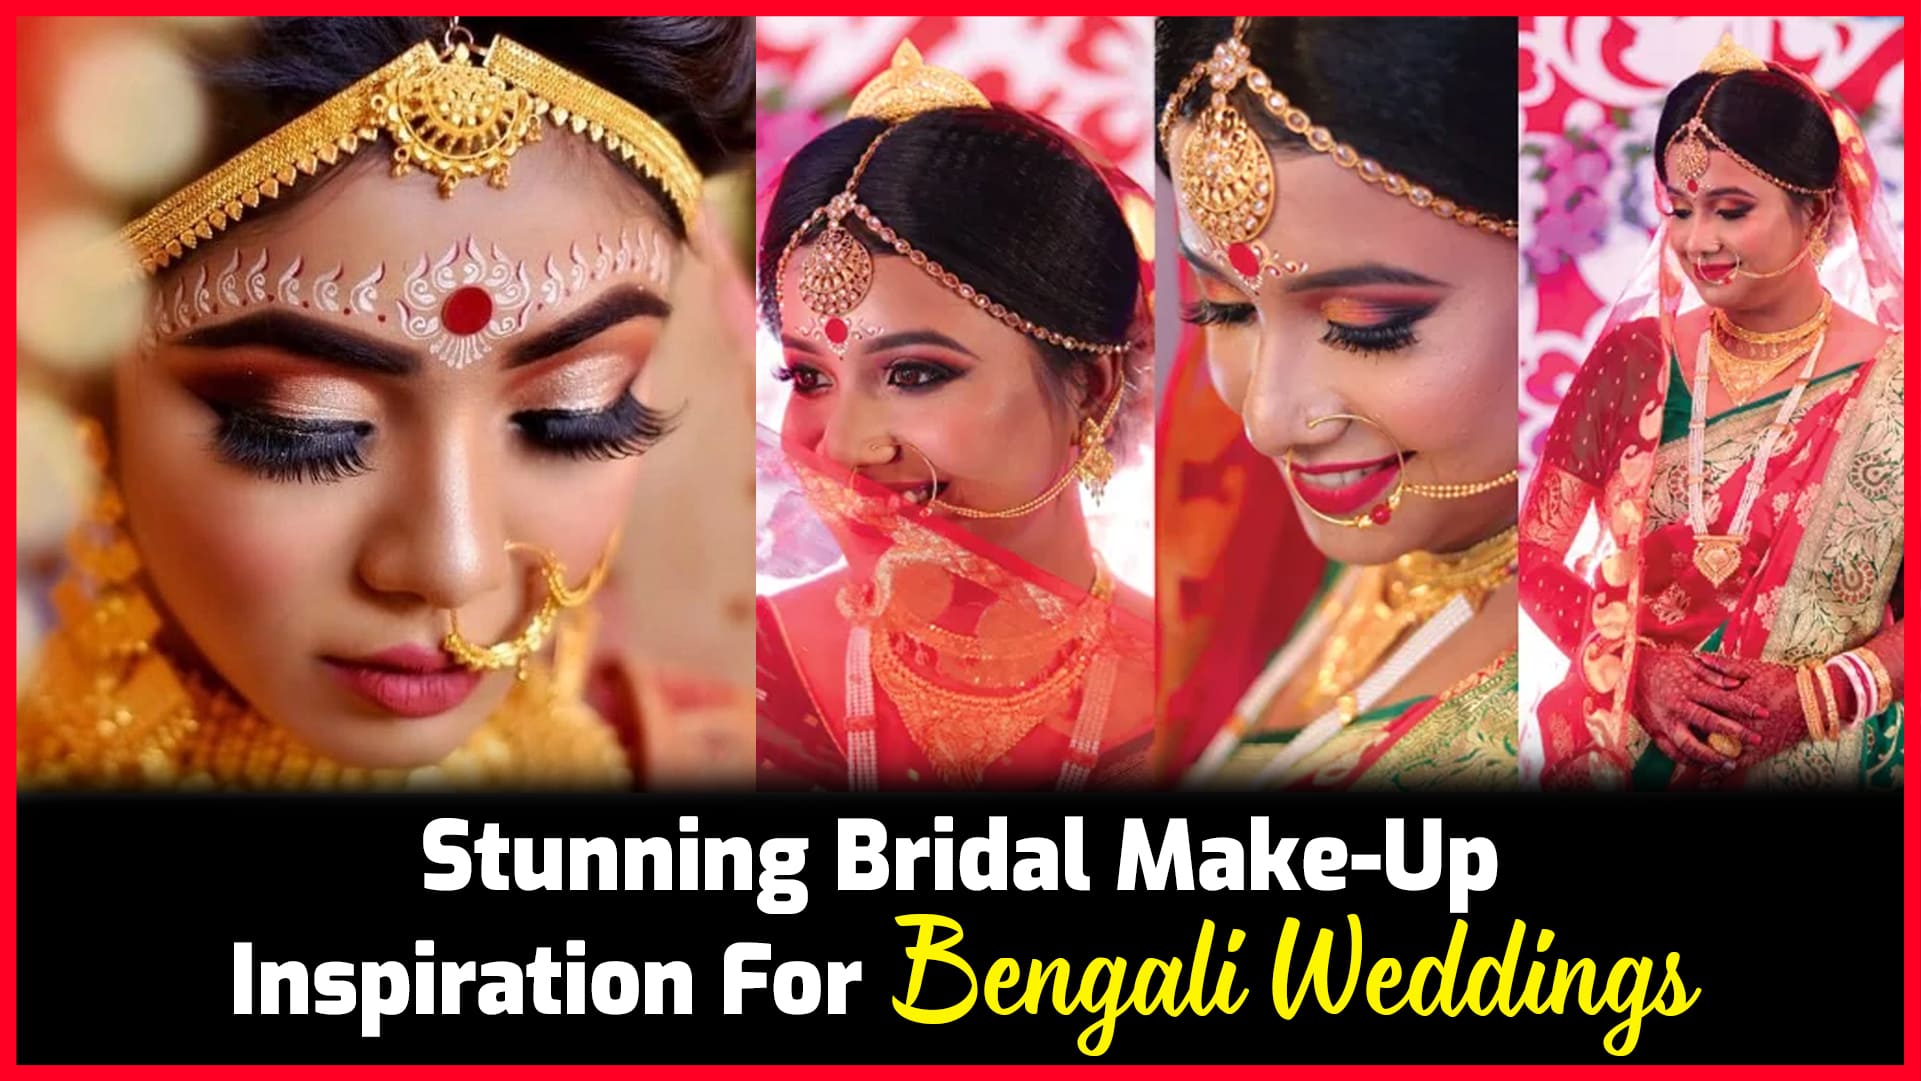 Stunning bridal make-up inspiration for Bengali Weddings